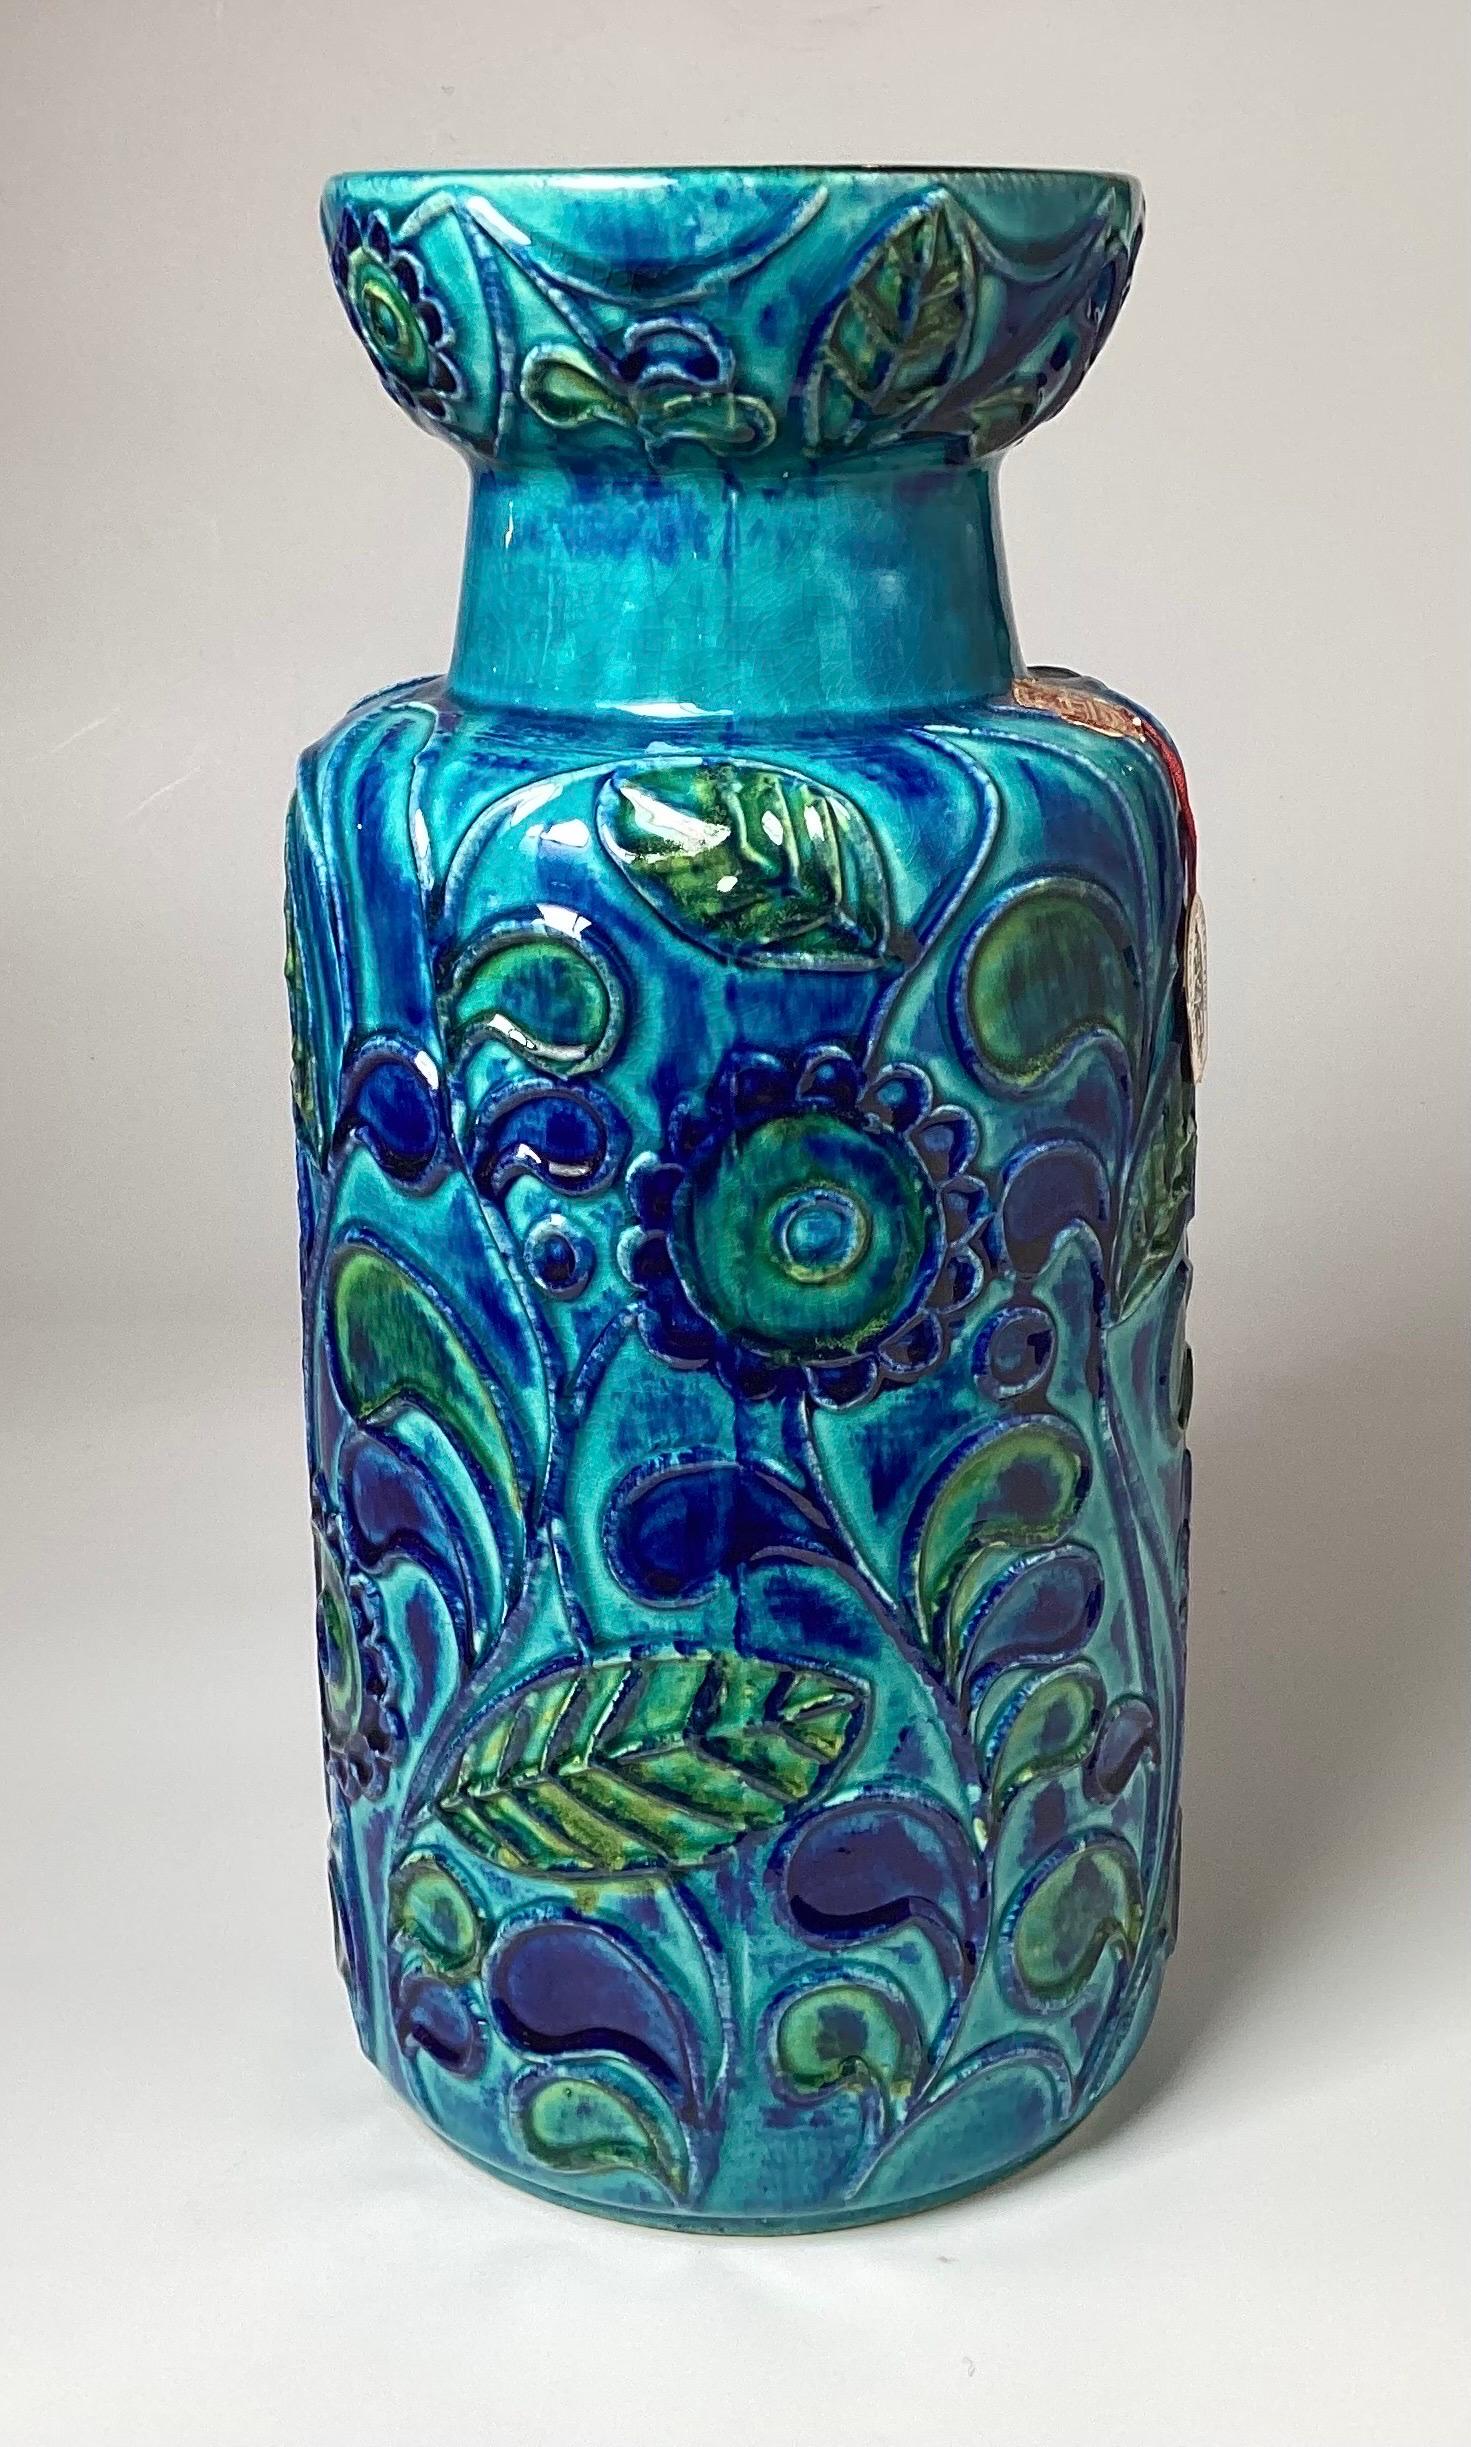 A vibrant Blue Mid Century Modern Ceramic Vase by Bay Keramik 1